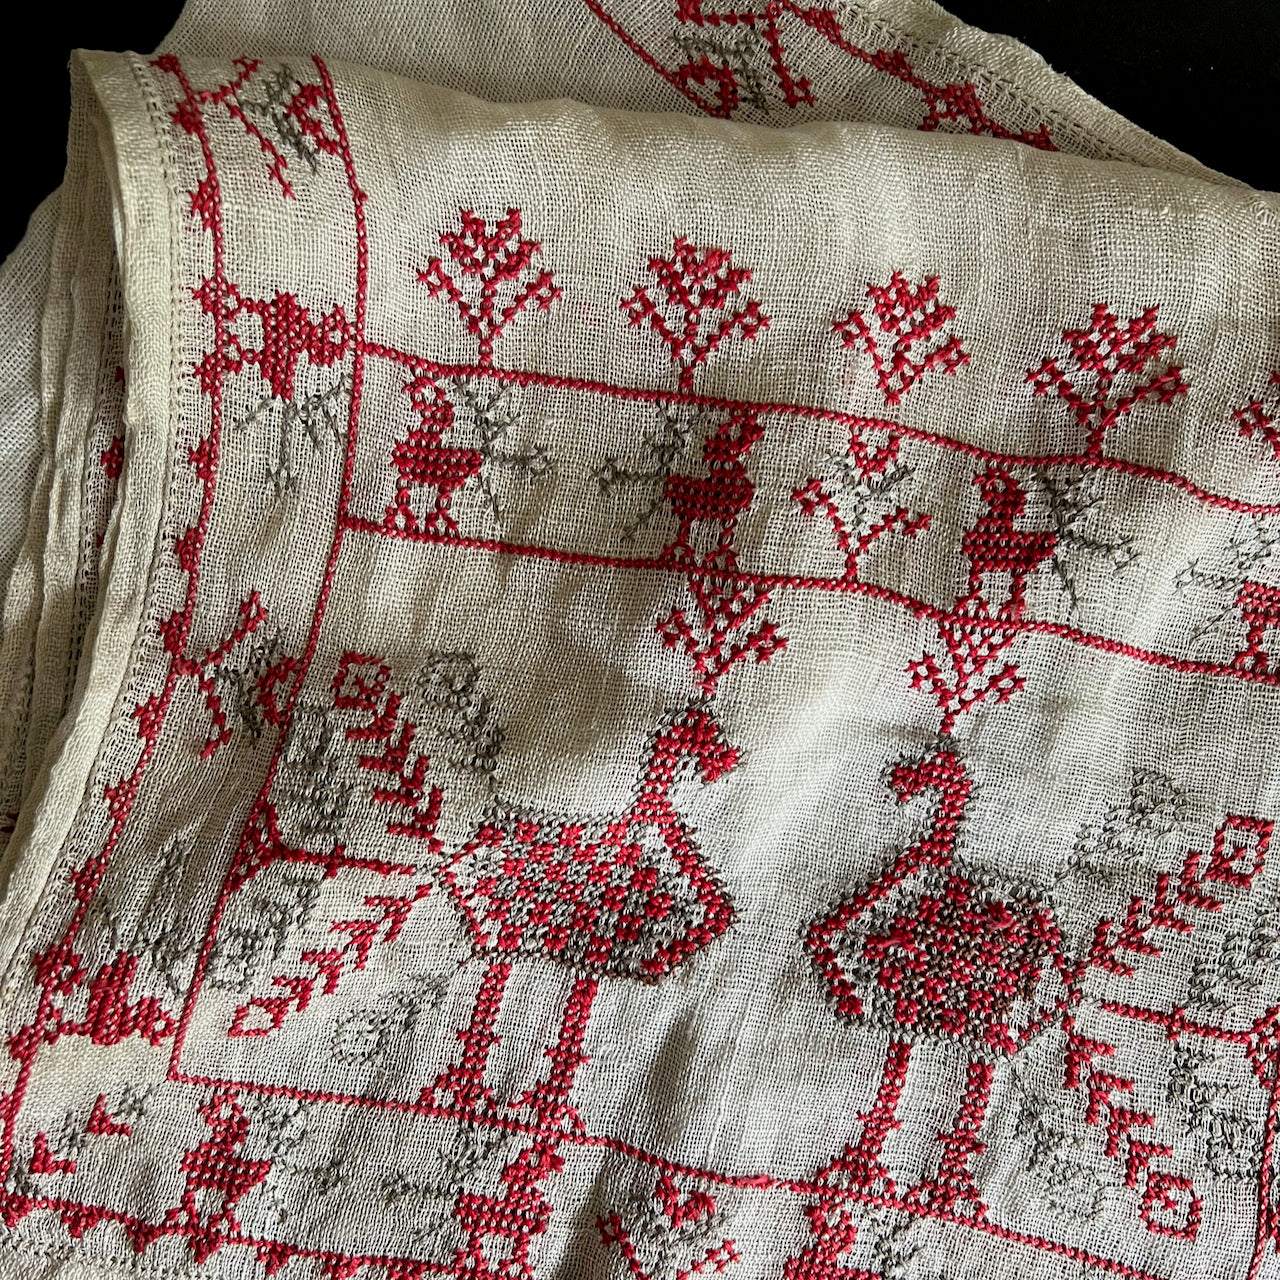 American Antique Needlework Show Towel (1800s)